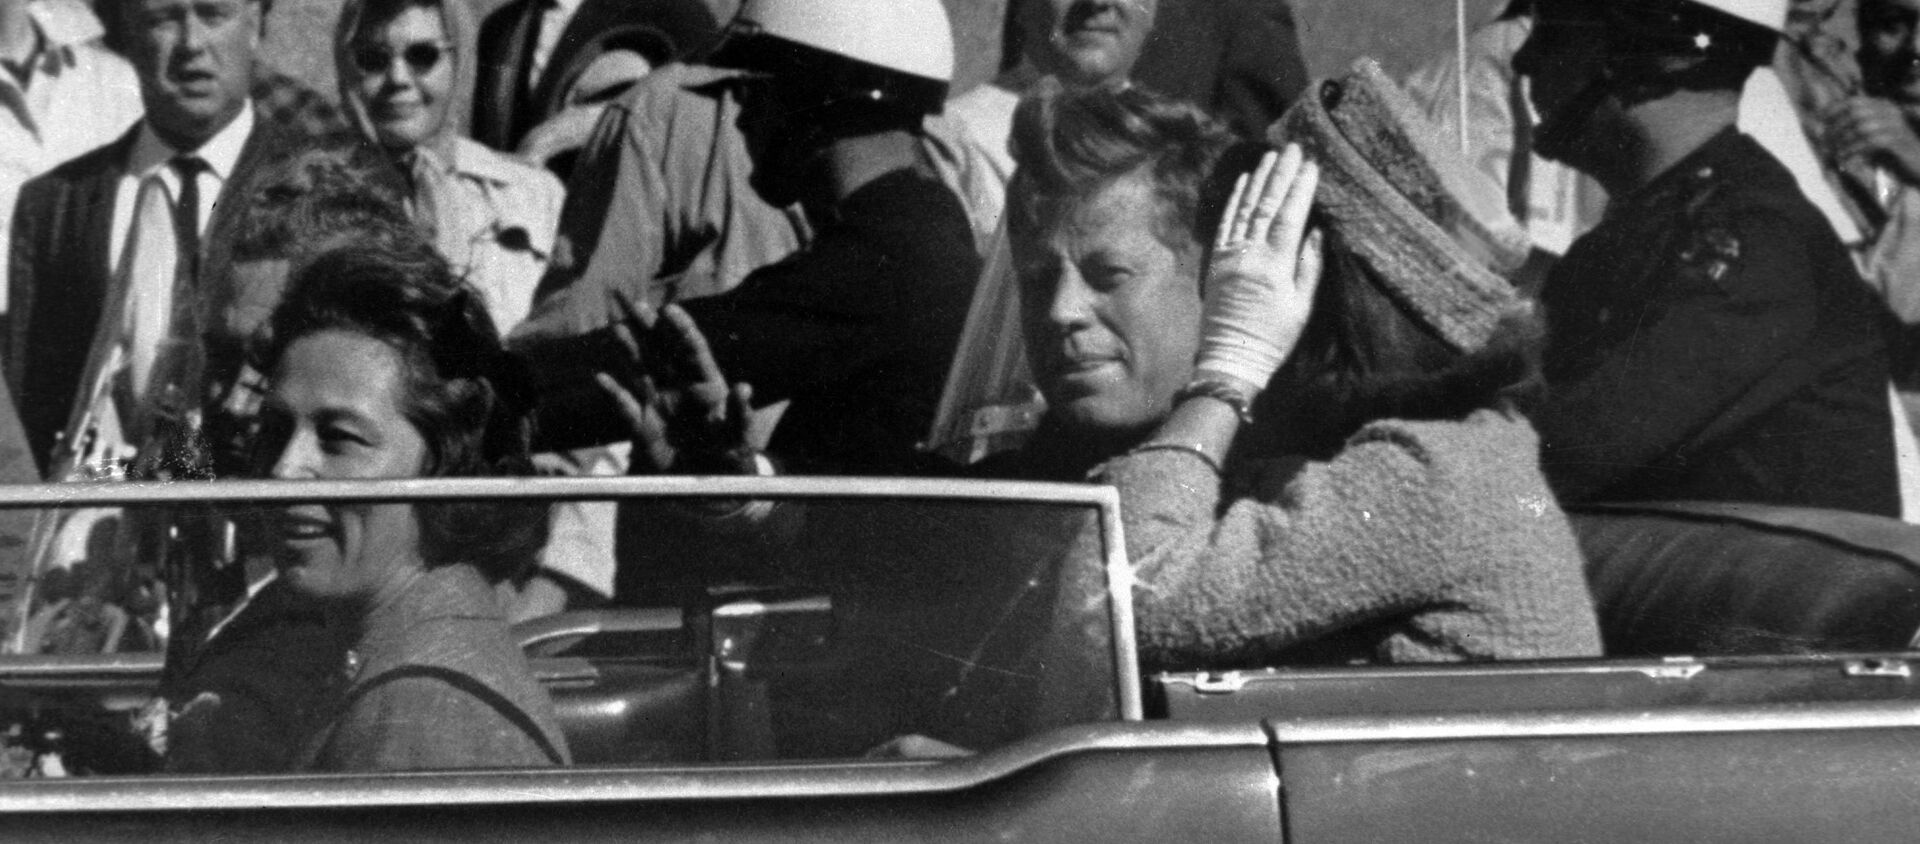 El presidente de EEUU, John F. Kennedy, un minuto antes de ser asesinado - Sputnik Mundo, 1920, 22.11.2020